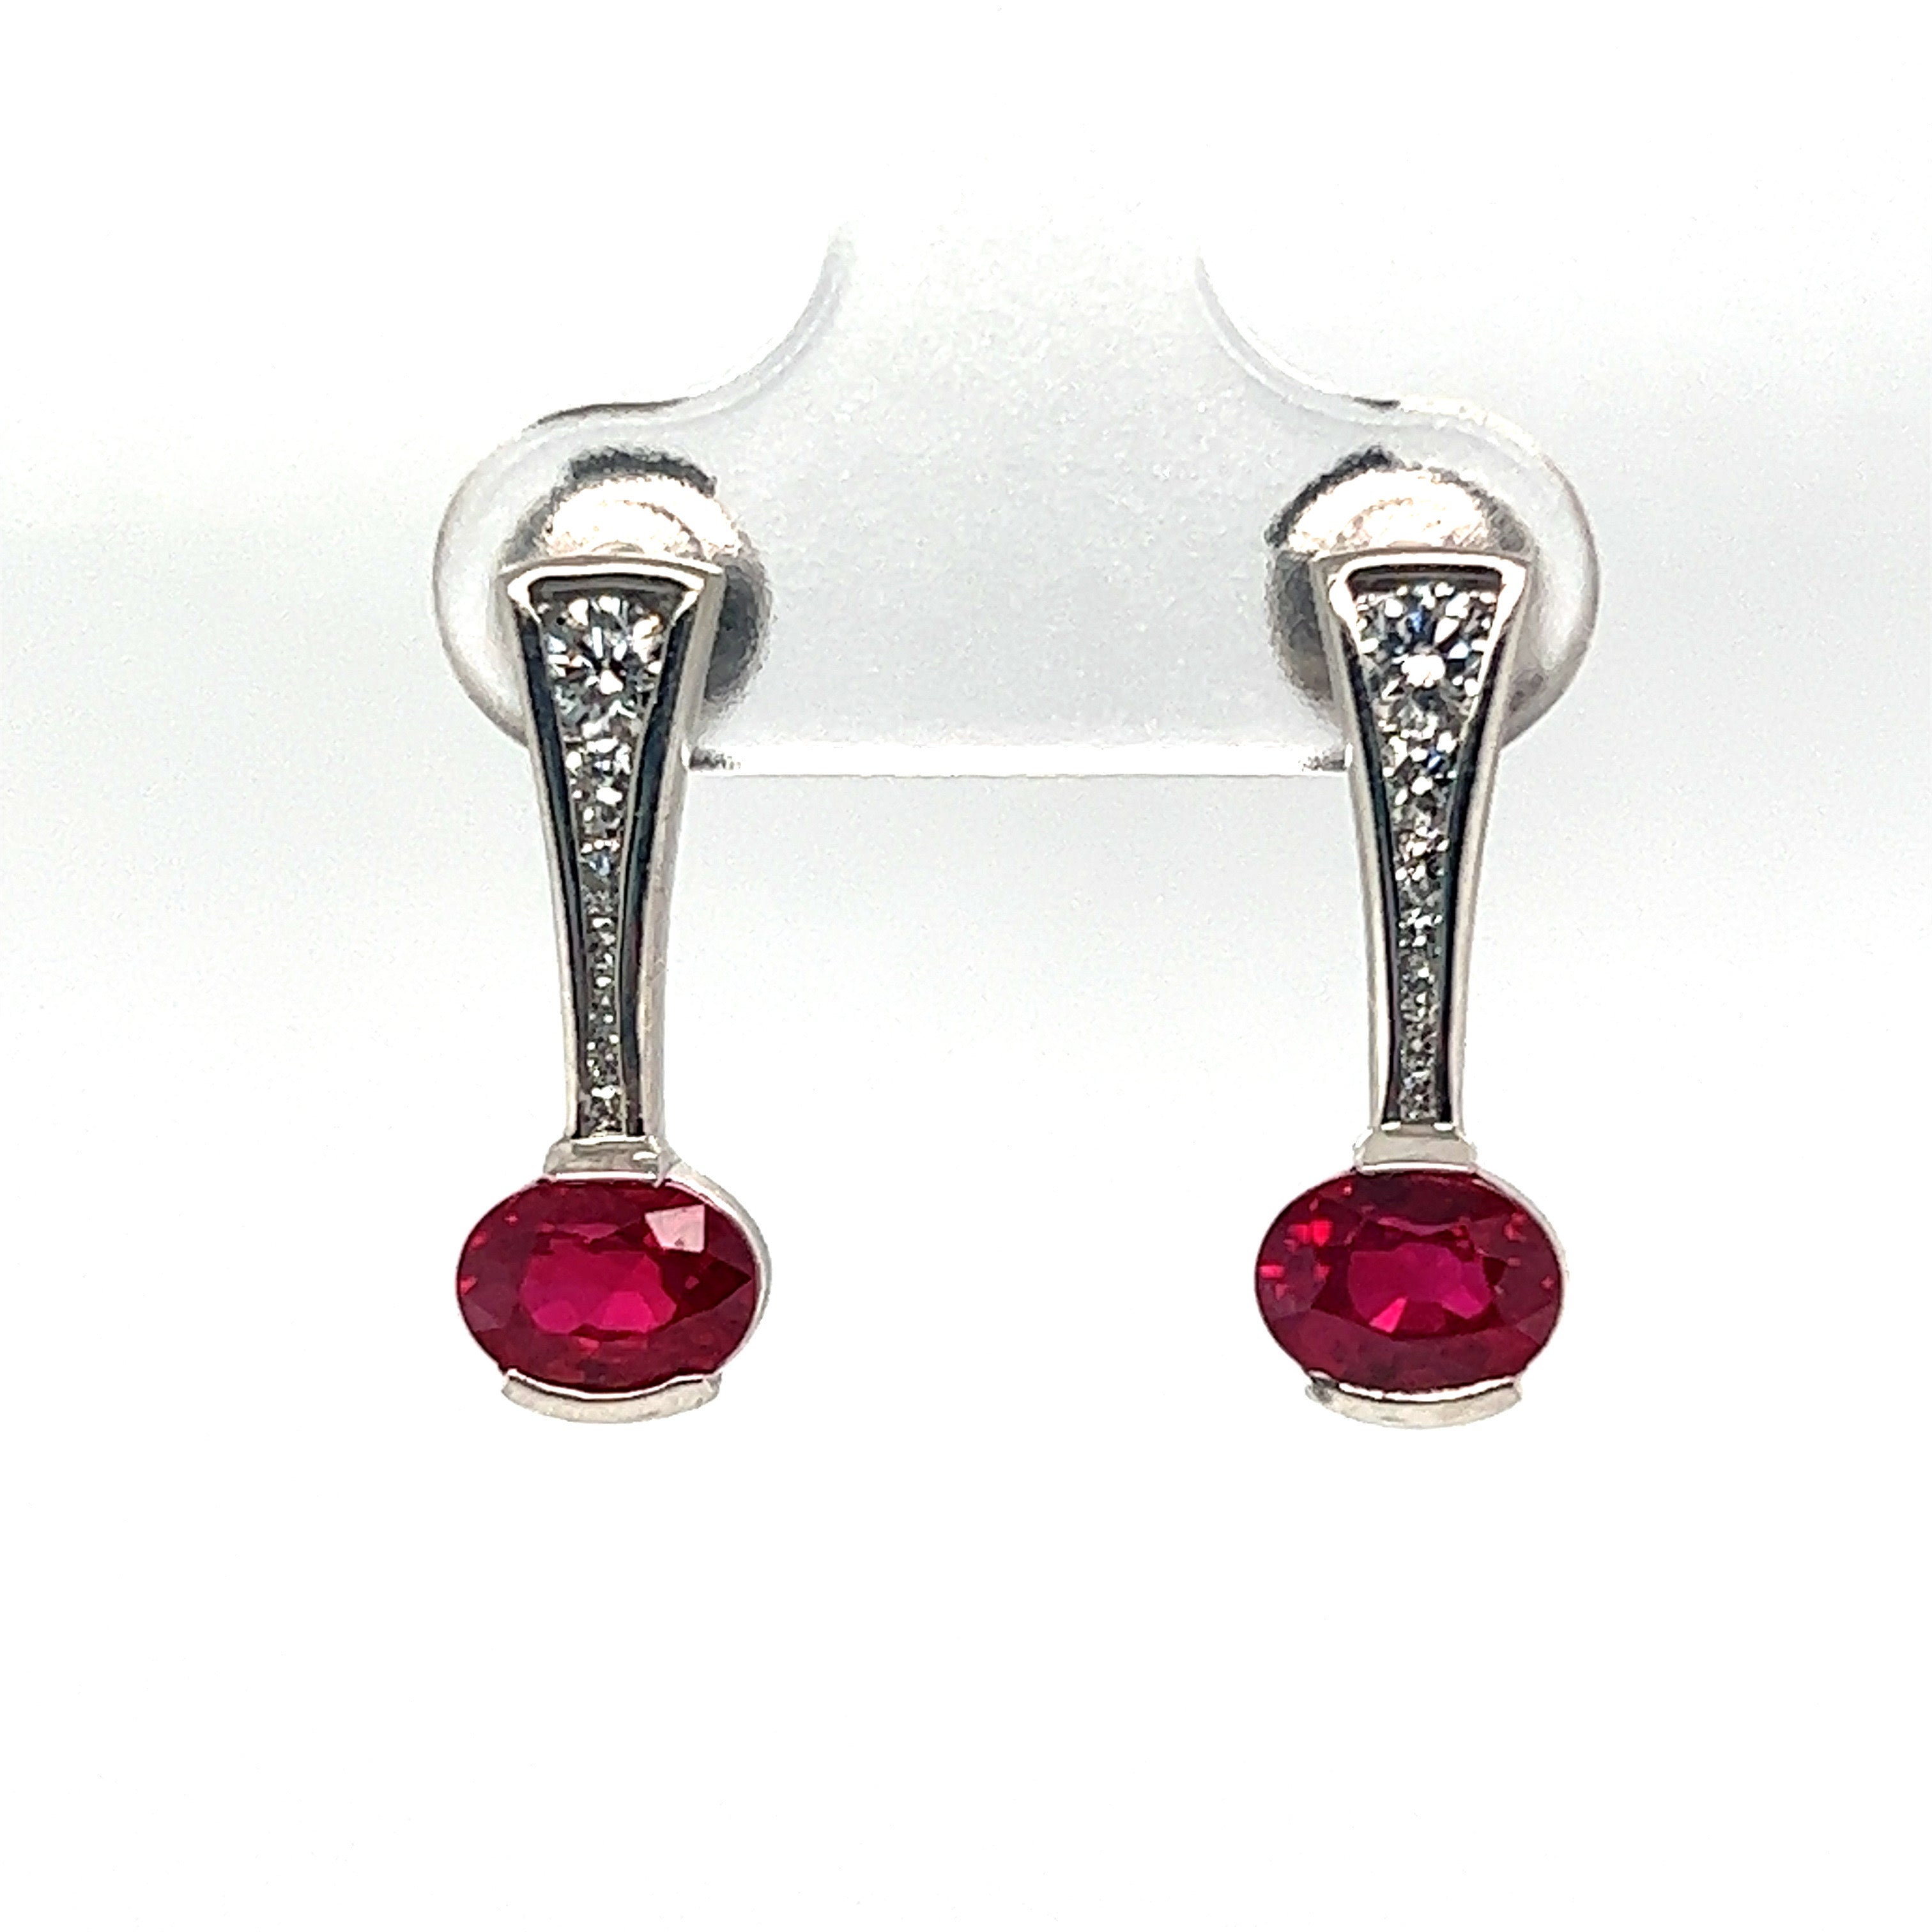 Shop Natural Ruby Earrings Studs Online for Women | GemsNY